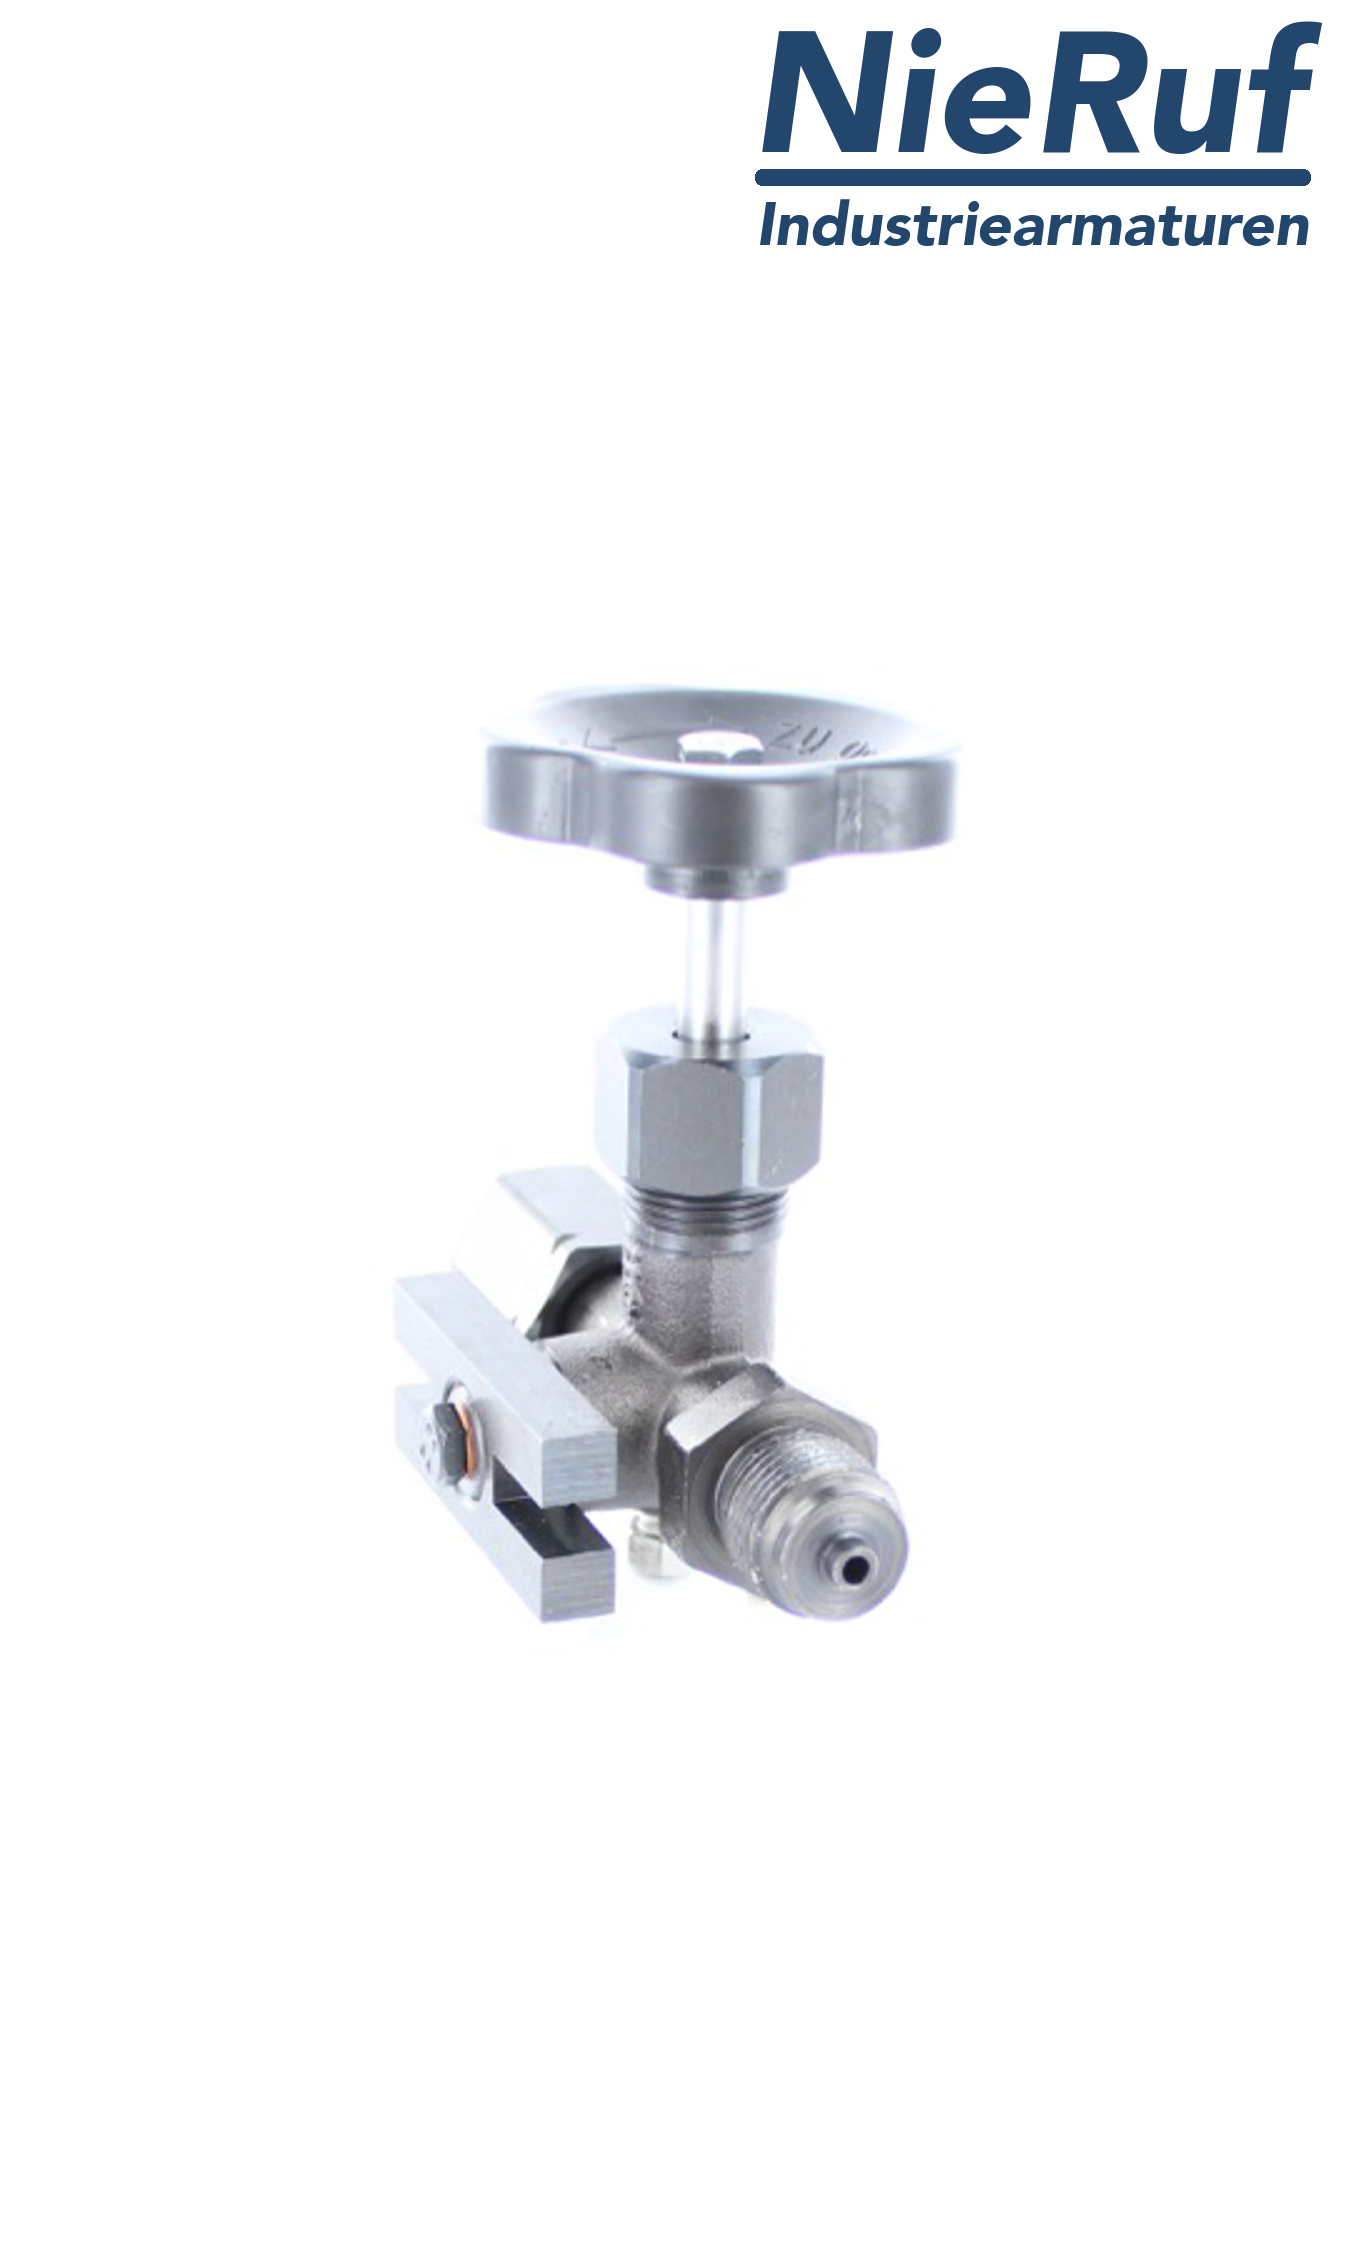 manometer gauge valves male thread x sleeve x test flange 60x25 mm DIN 16271 steel 1.0460 400 bar